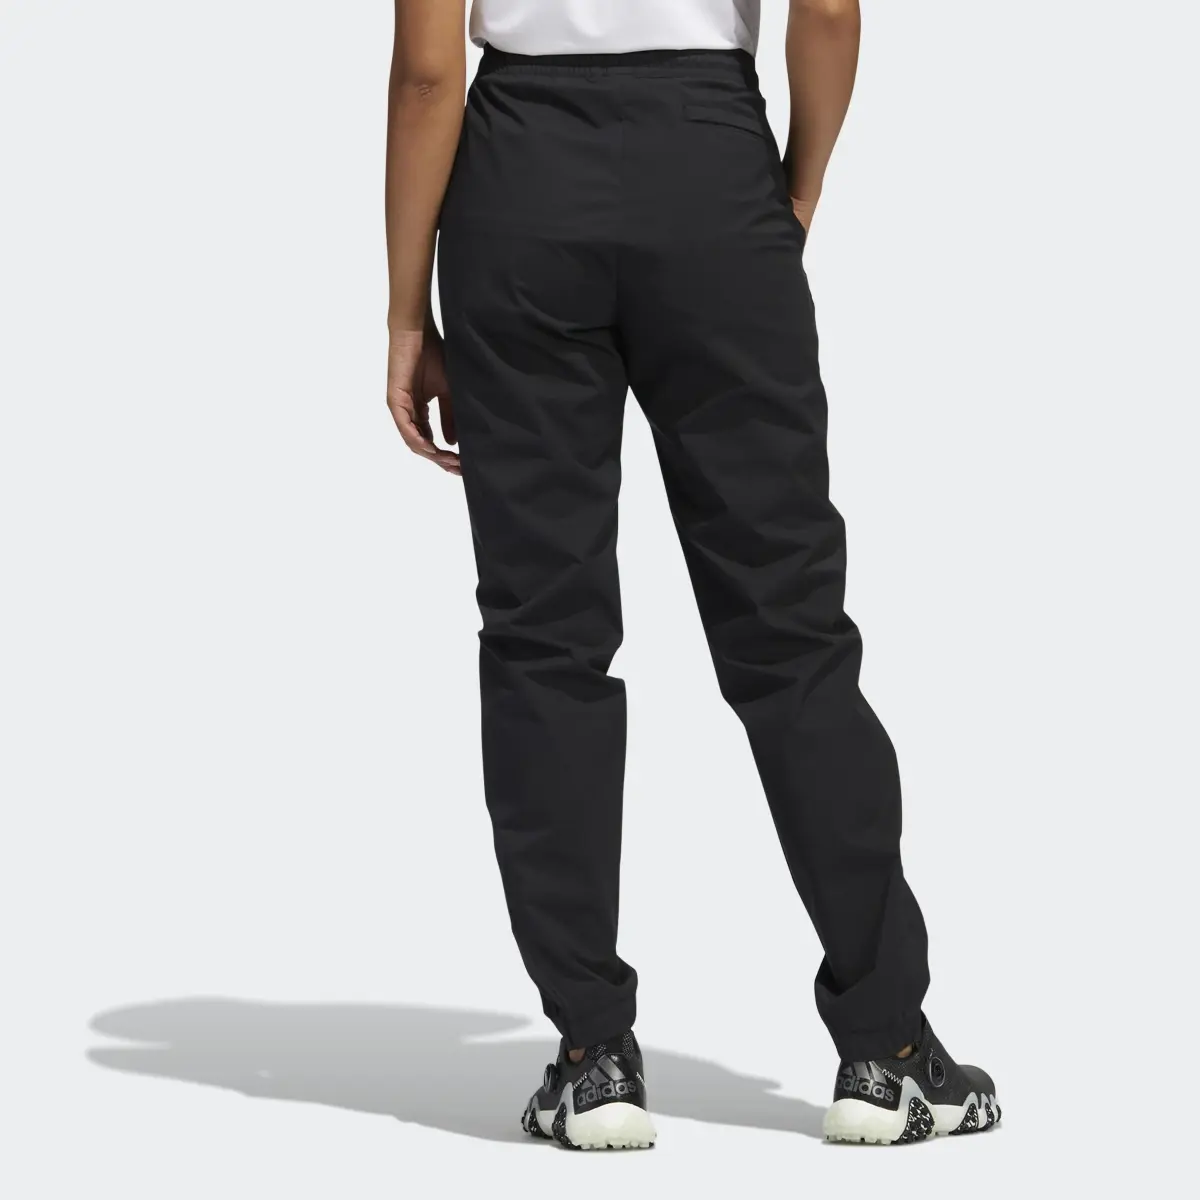 Adidas Provisional Golf Pants. 2